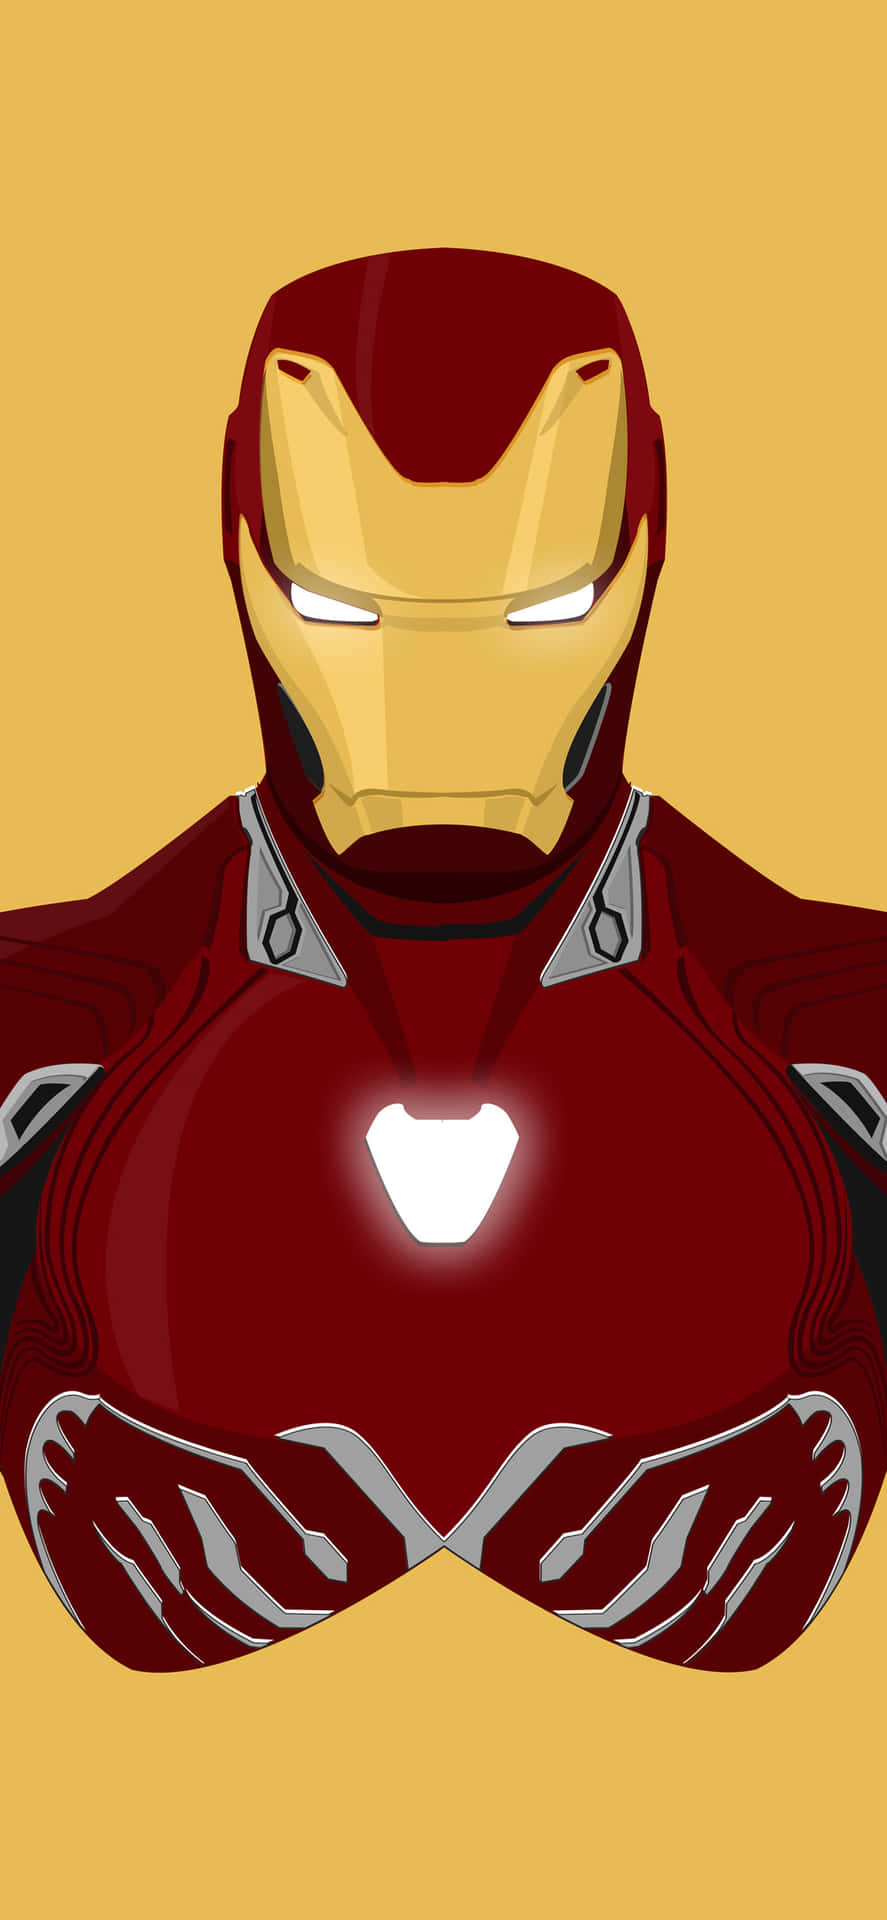 Wallpaperestetiskt Cool Iron Man Iphone Bakgrundsbild. Wallpaper